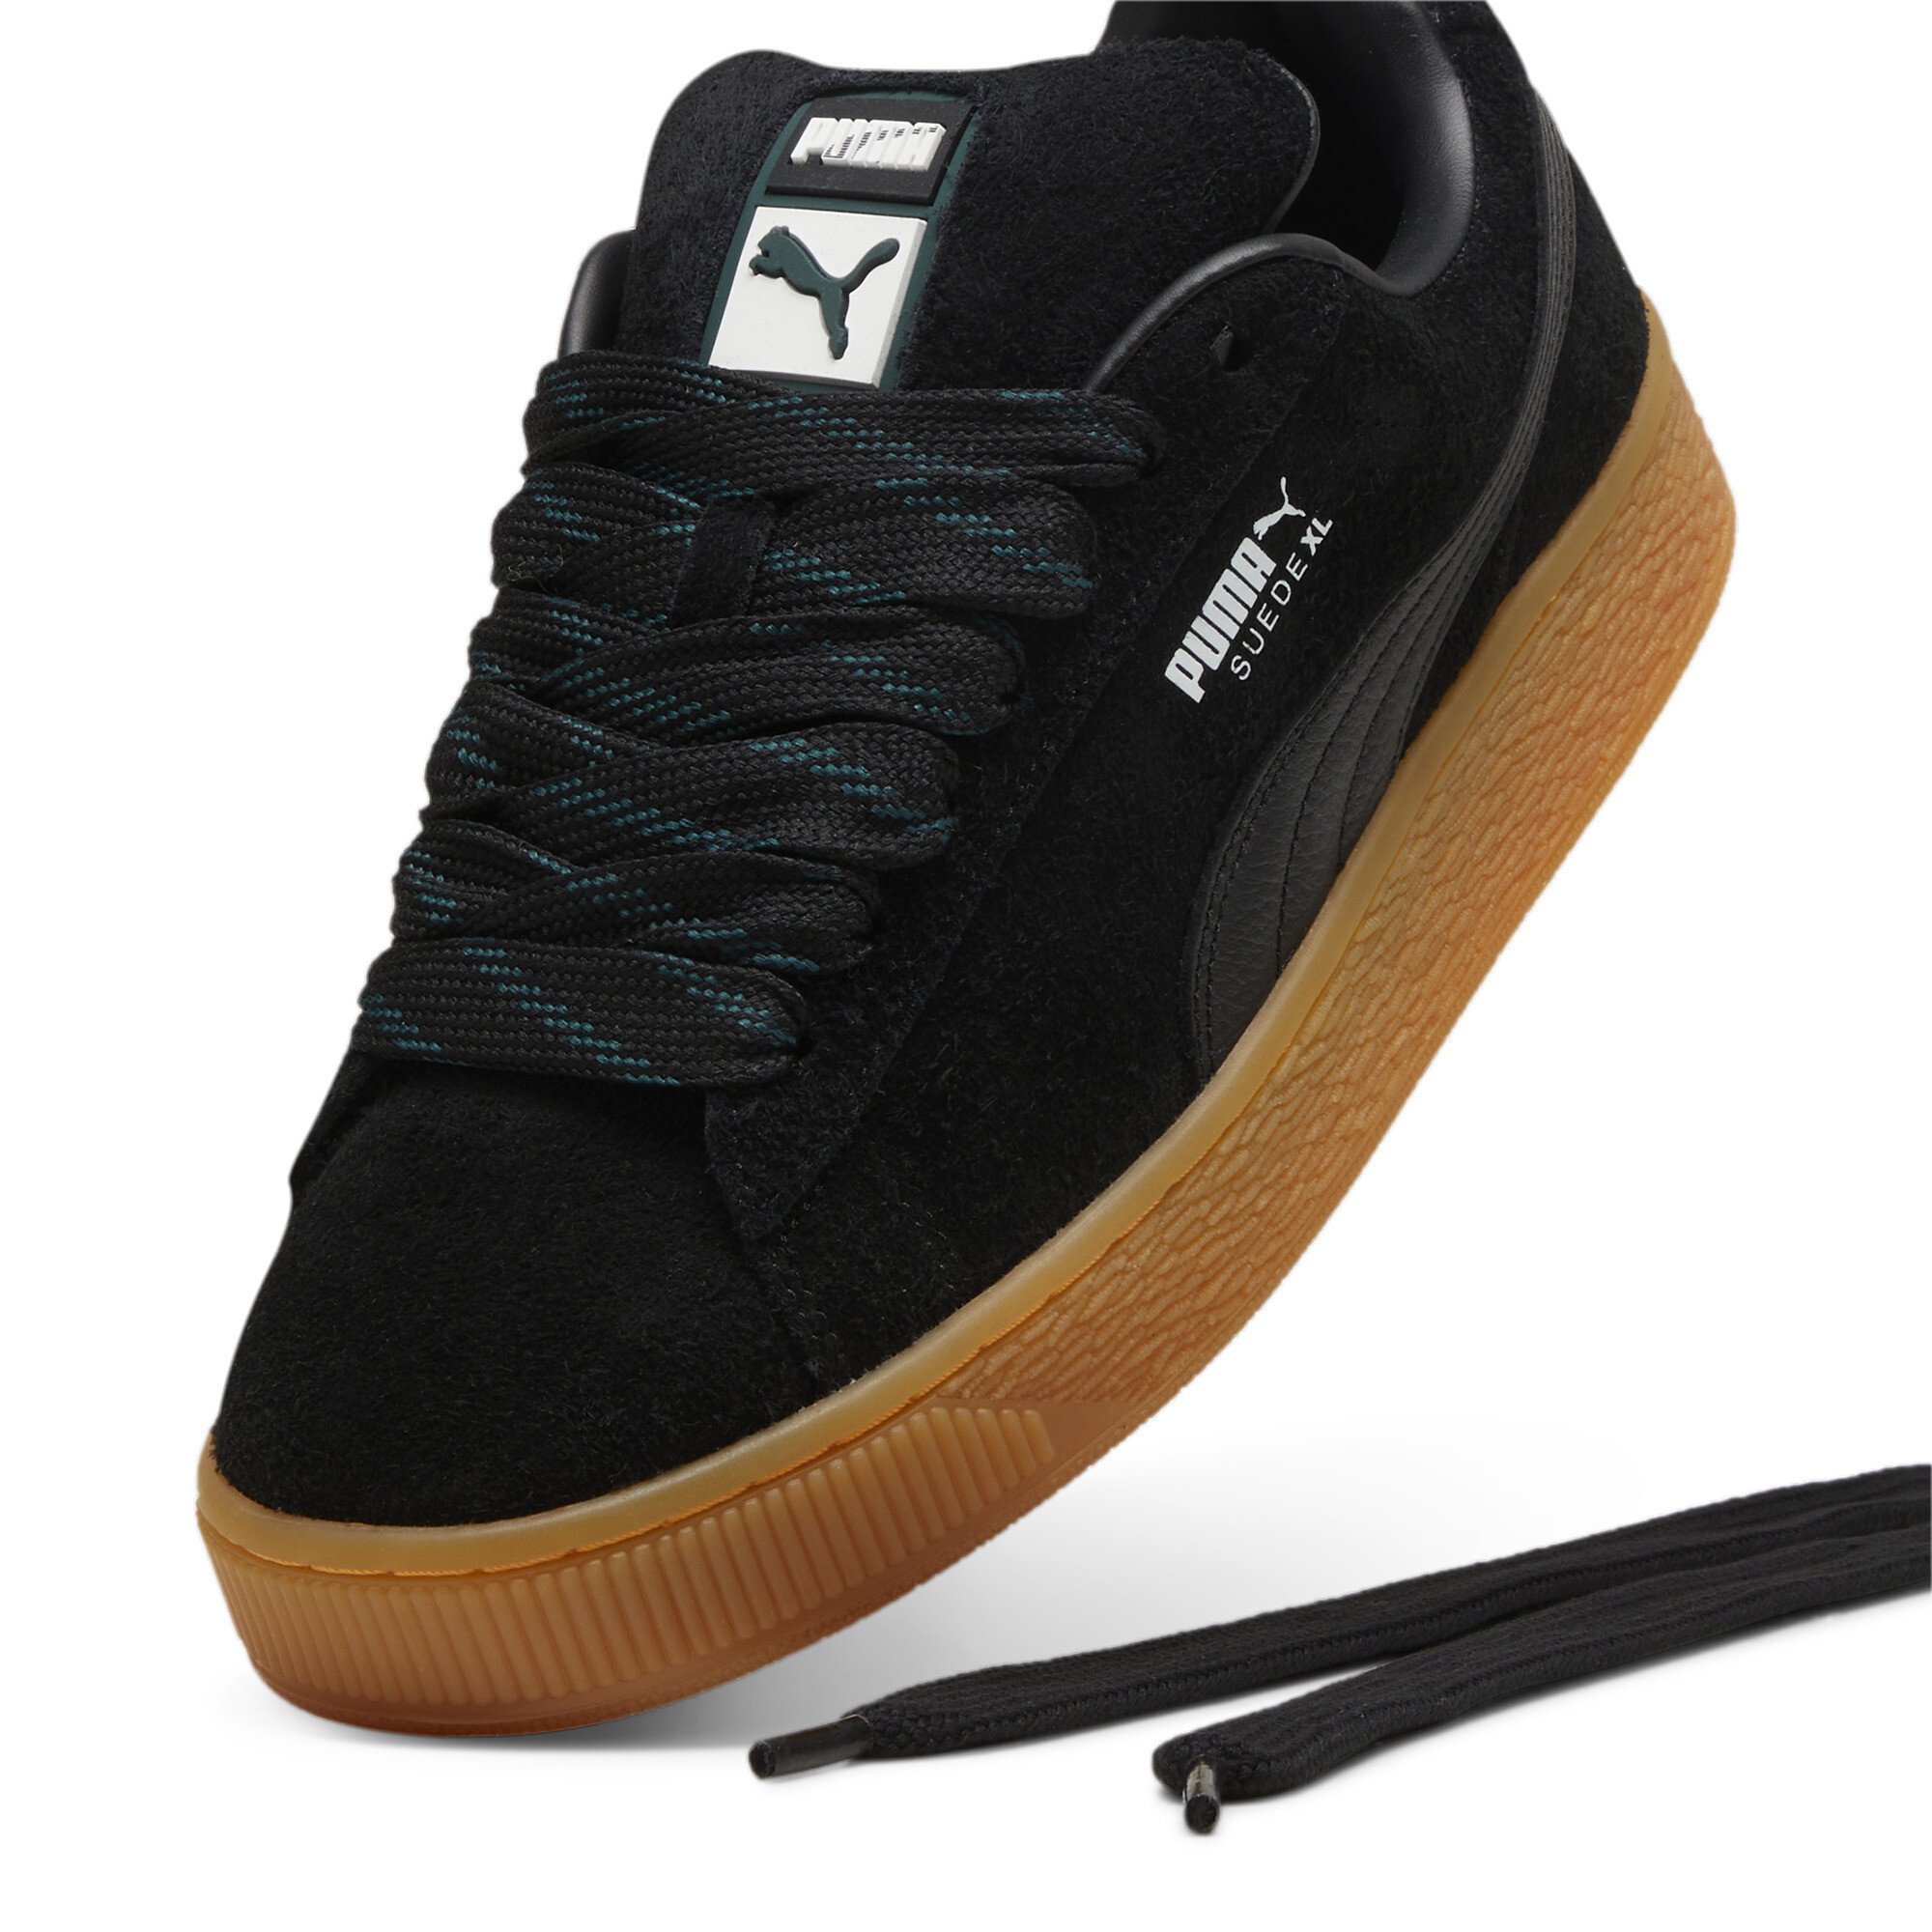 Puma Suede XL Flecked Unisex, Black, Size 37.5, Shoes